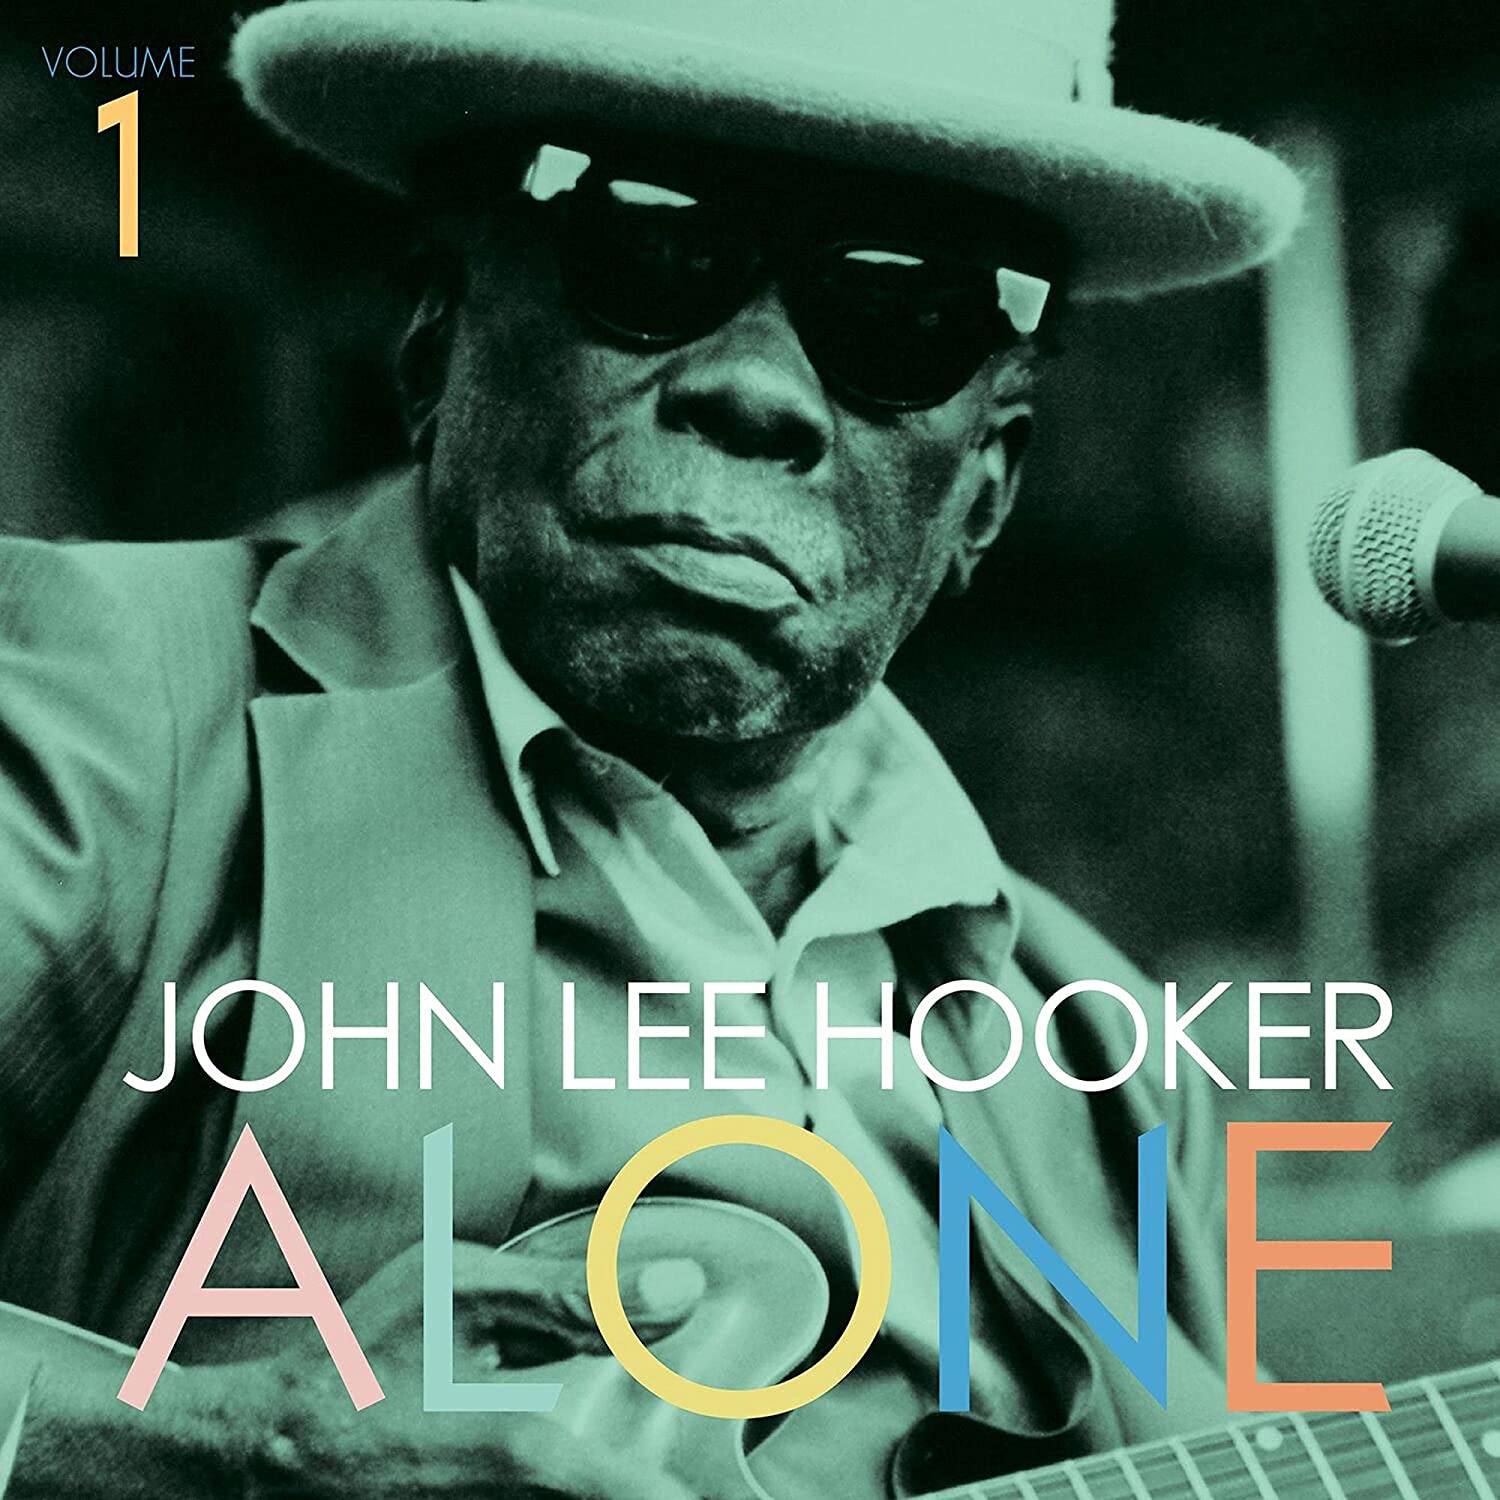 JOHN LEE HOOKER - ALONE VOL. 1 Vinyl LP